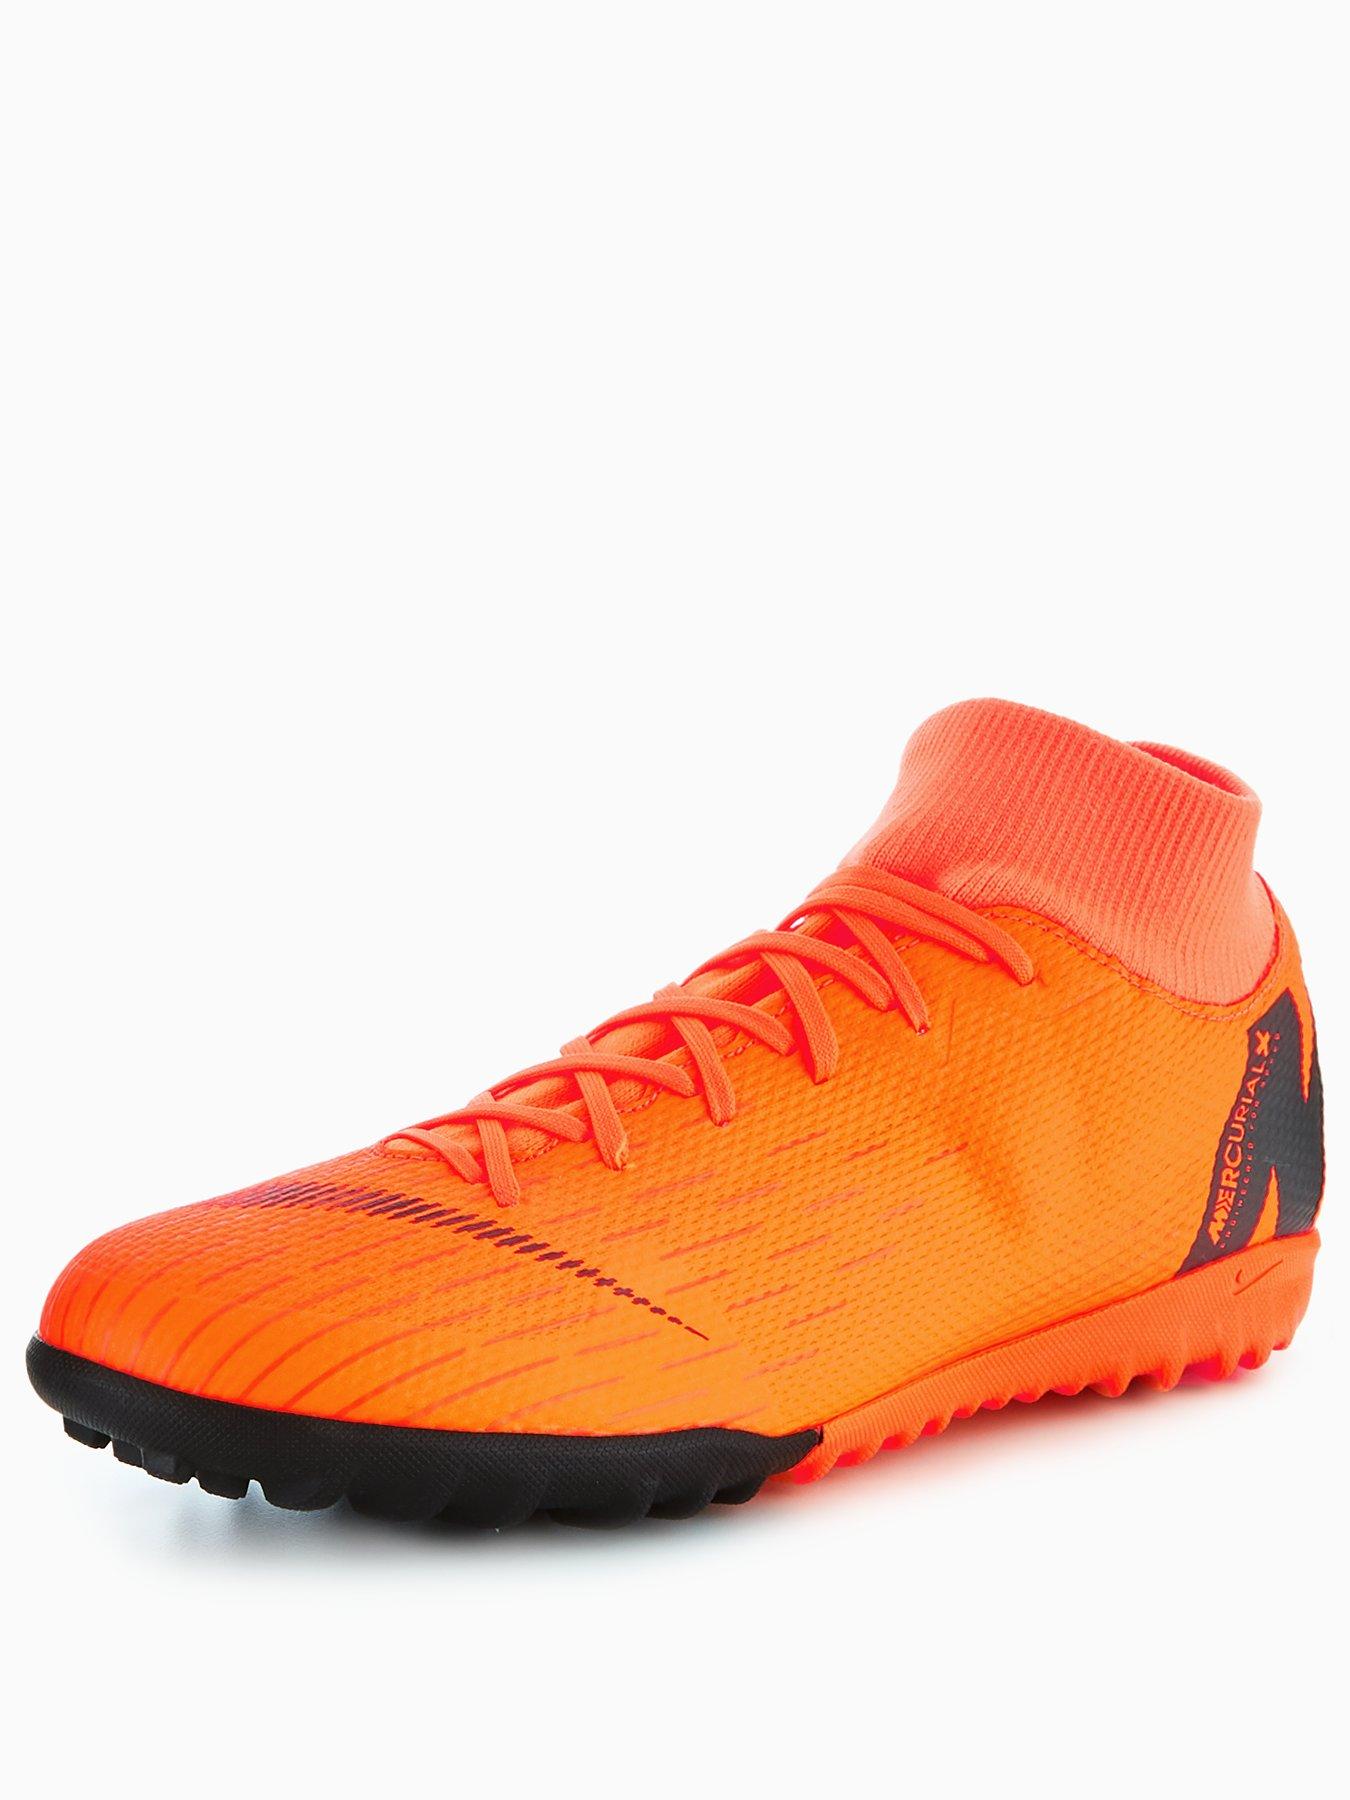 Spmx Chaussures De Nike Foot Mercurial Vi Superfly